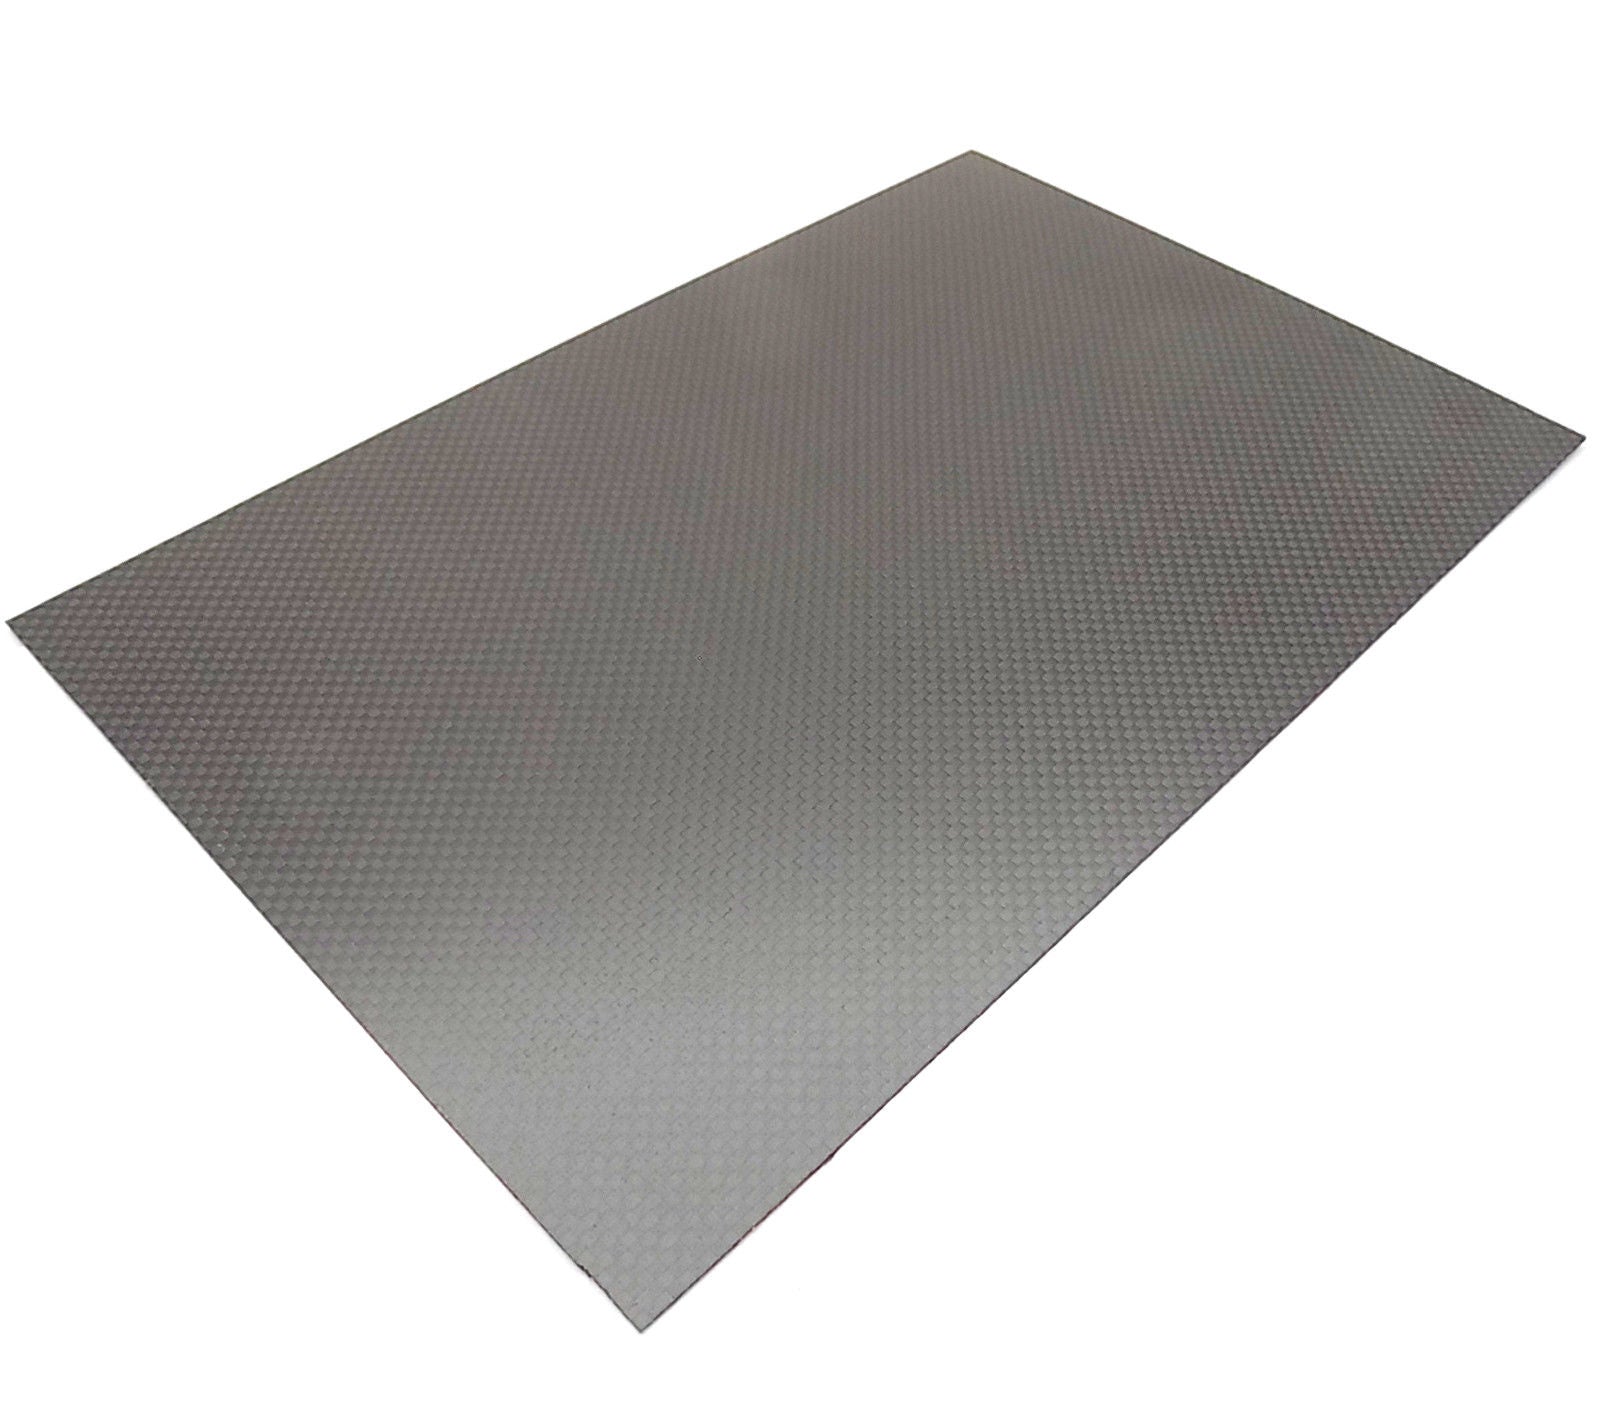 200 X 300 X 1 Mm Carbon Fiber Sheets 100% 3K Twill Matte Carbon Fiber Plate